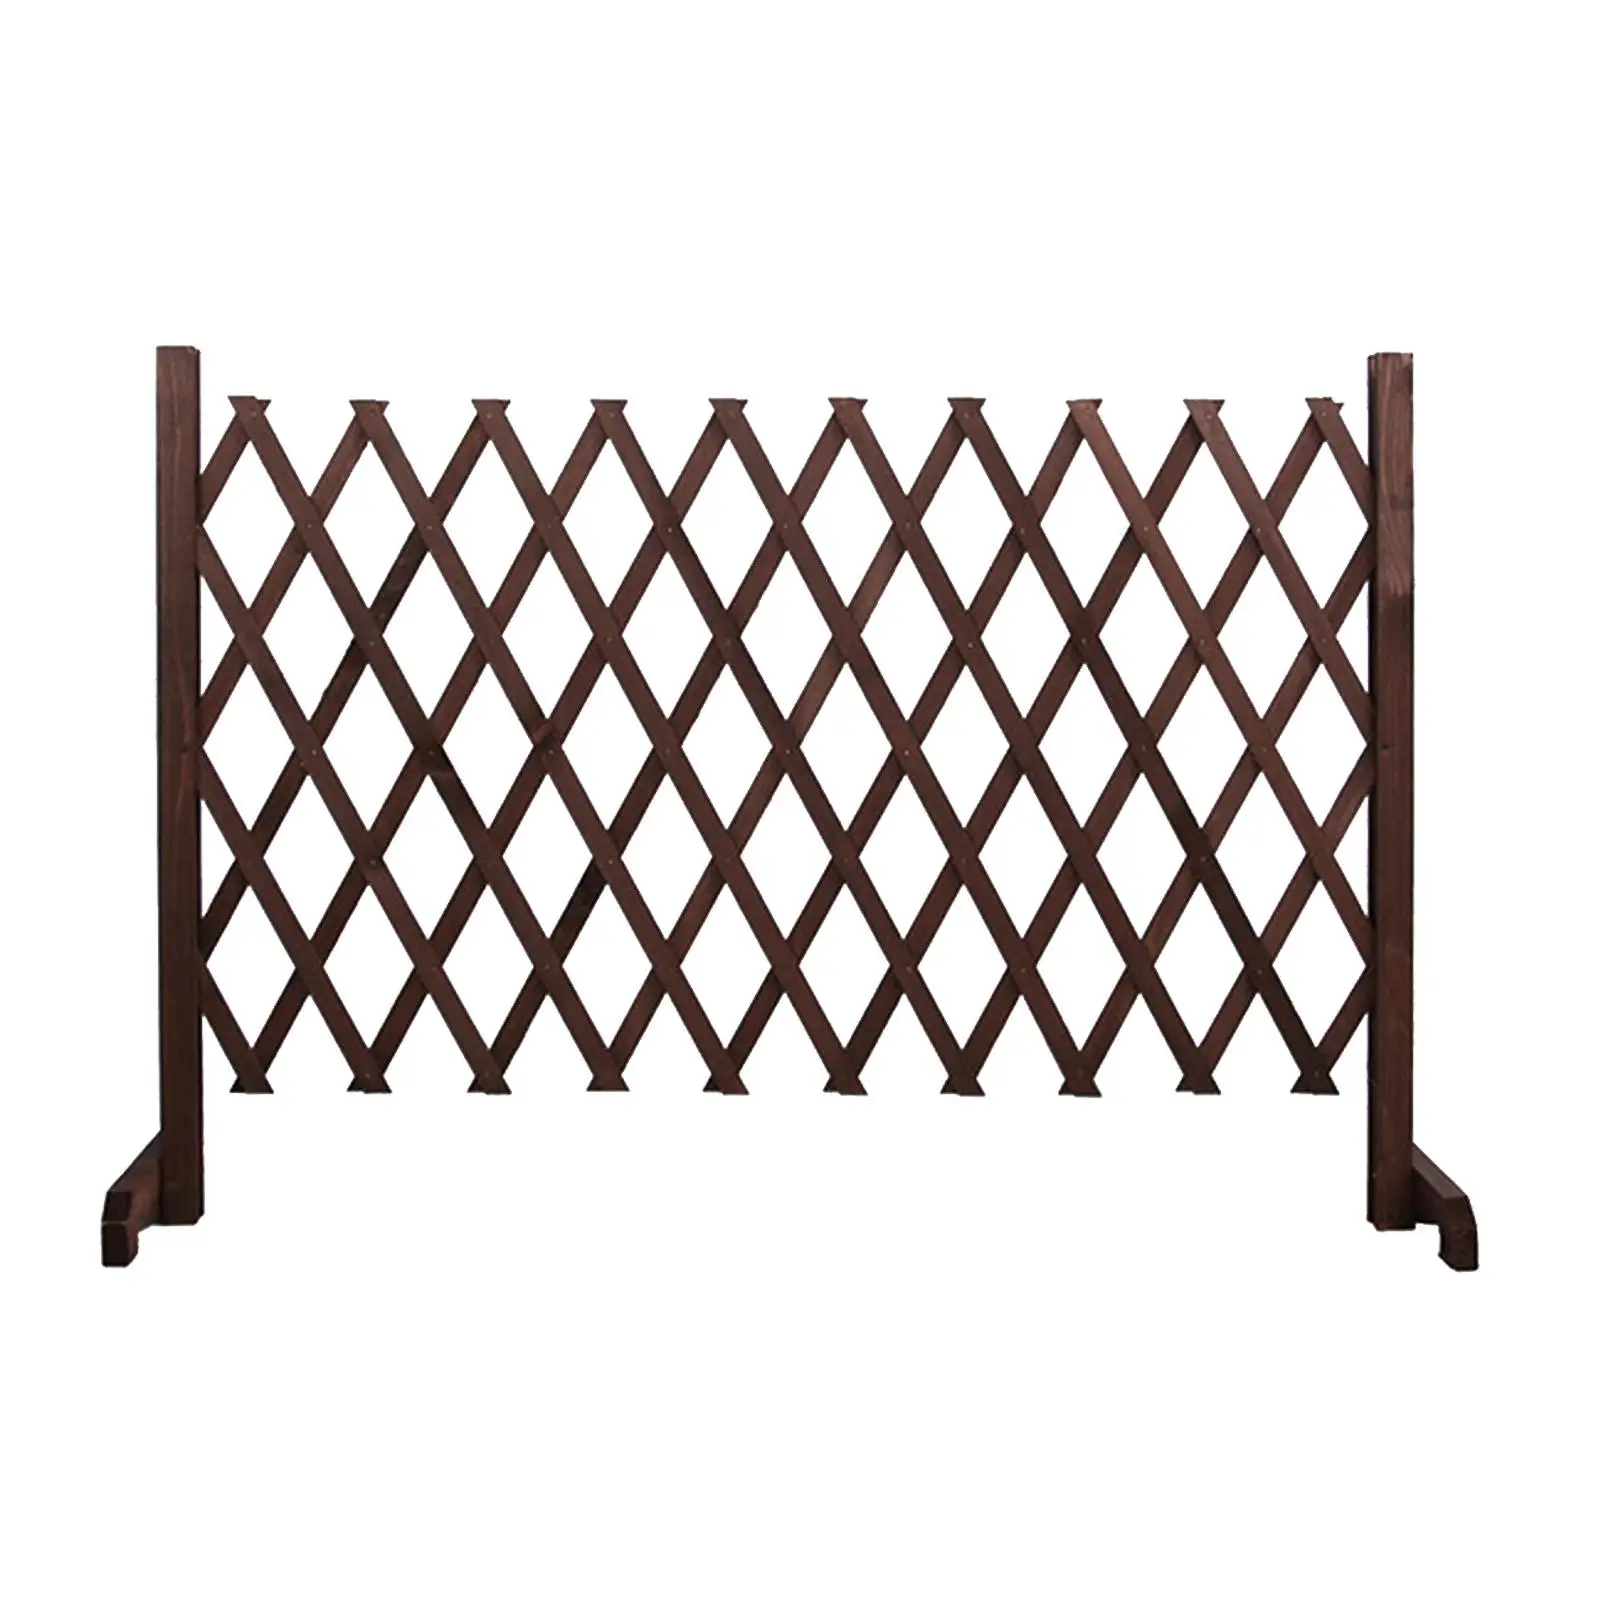 Freestanding Wooden Dog Gate, Foldable Pet Fence Dog Barrier Indoor Dog Gate Panels for Stairs